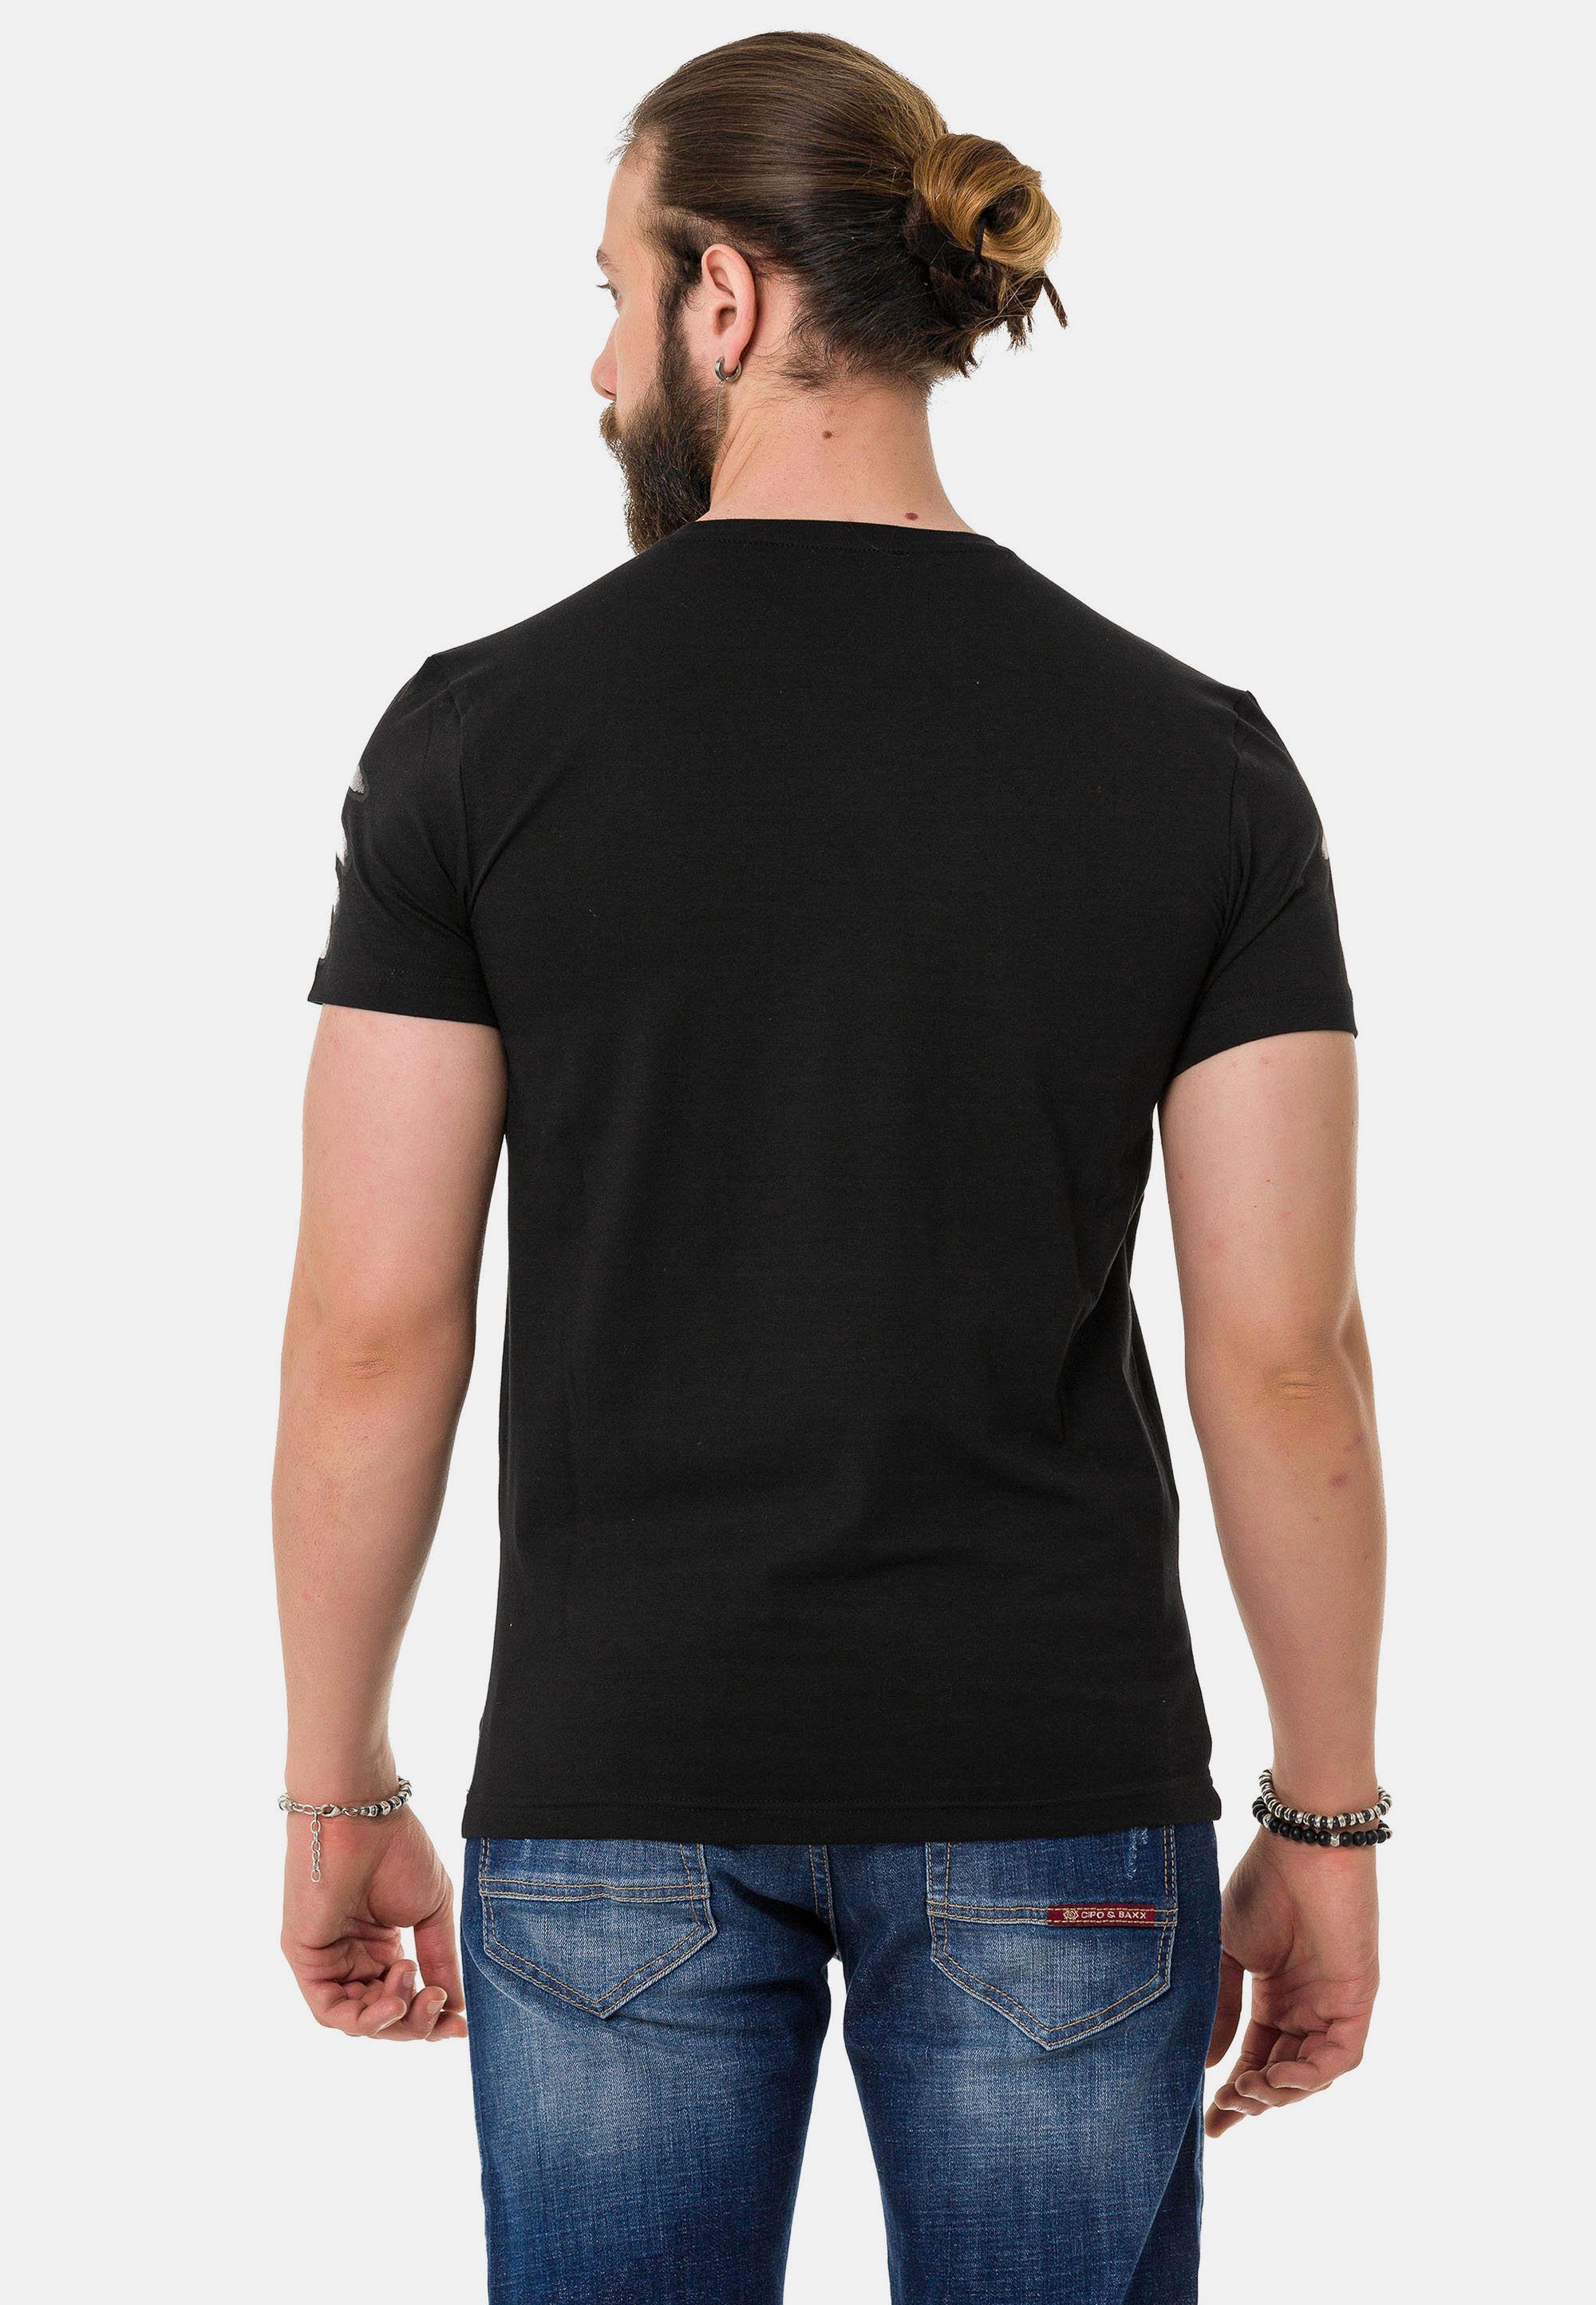 schwarz rockigem & Cipo T-Shirt Look in Baxx